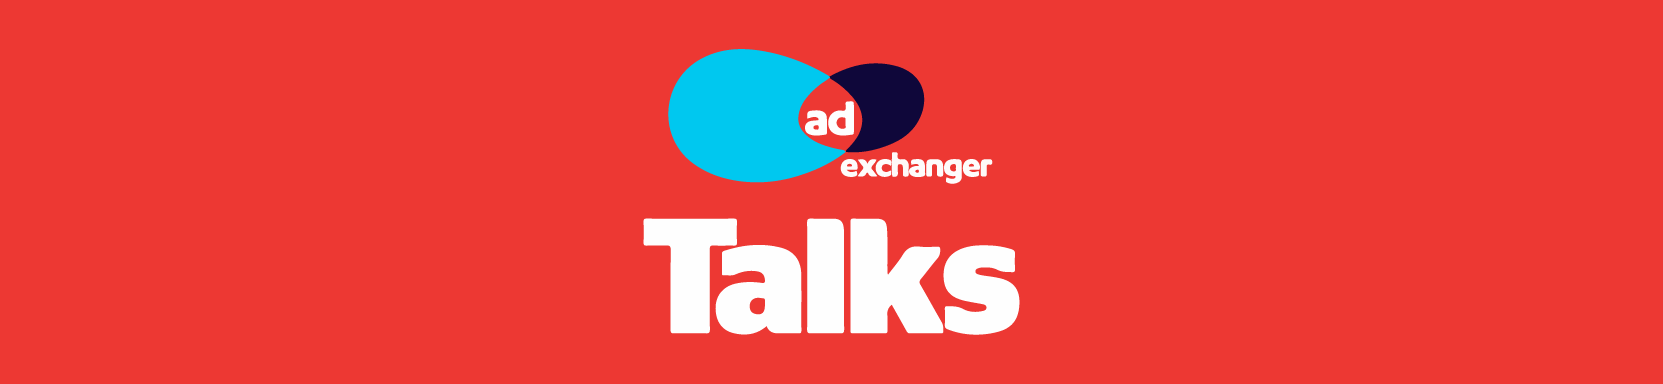 AdExchanger Advertising Marketing Podcast